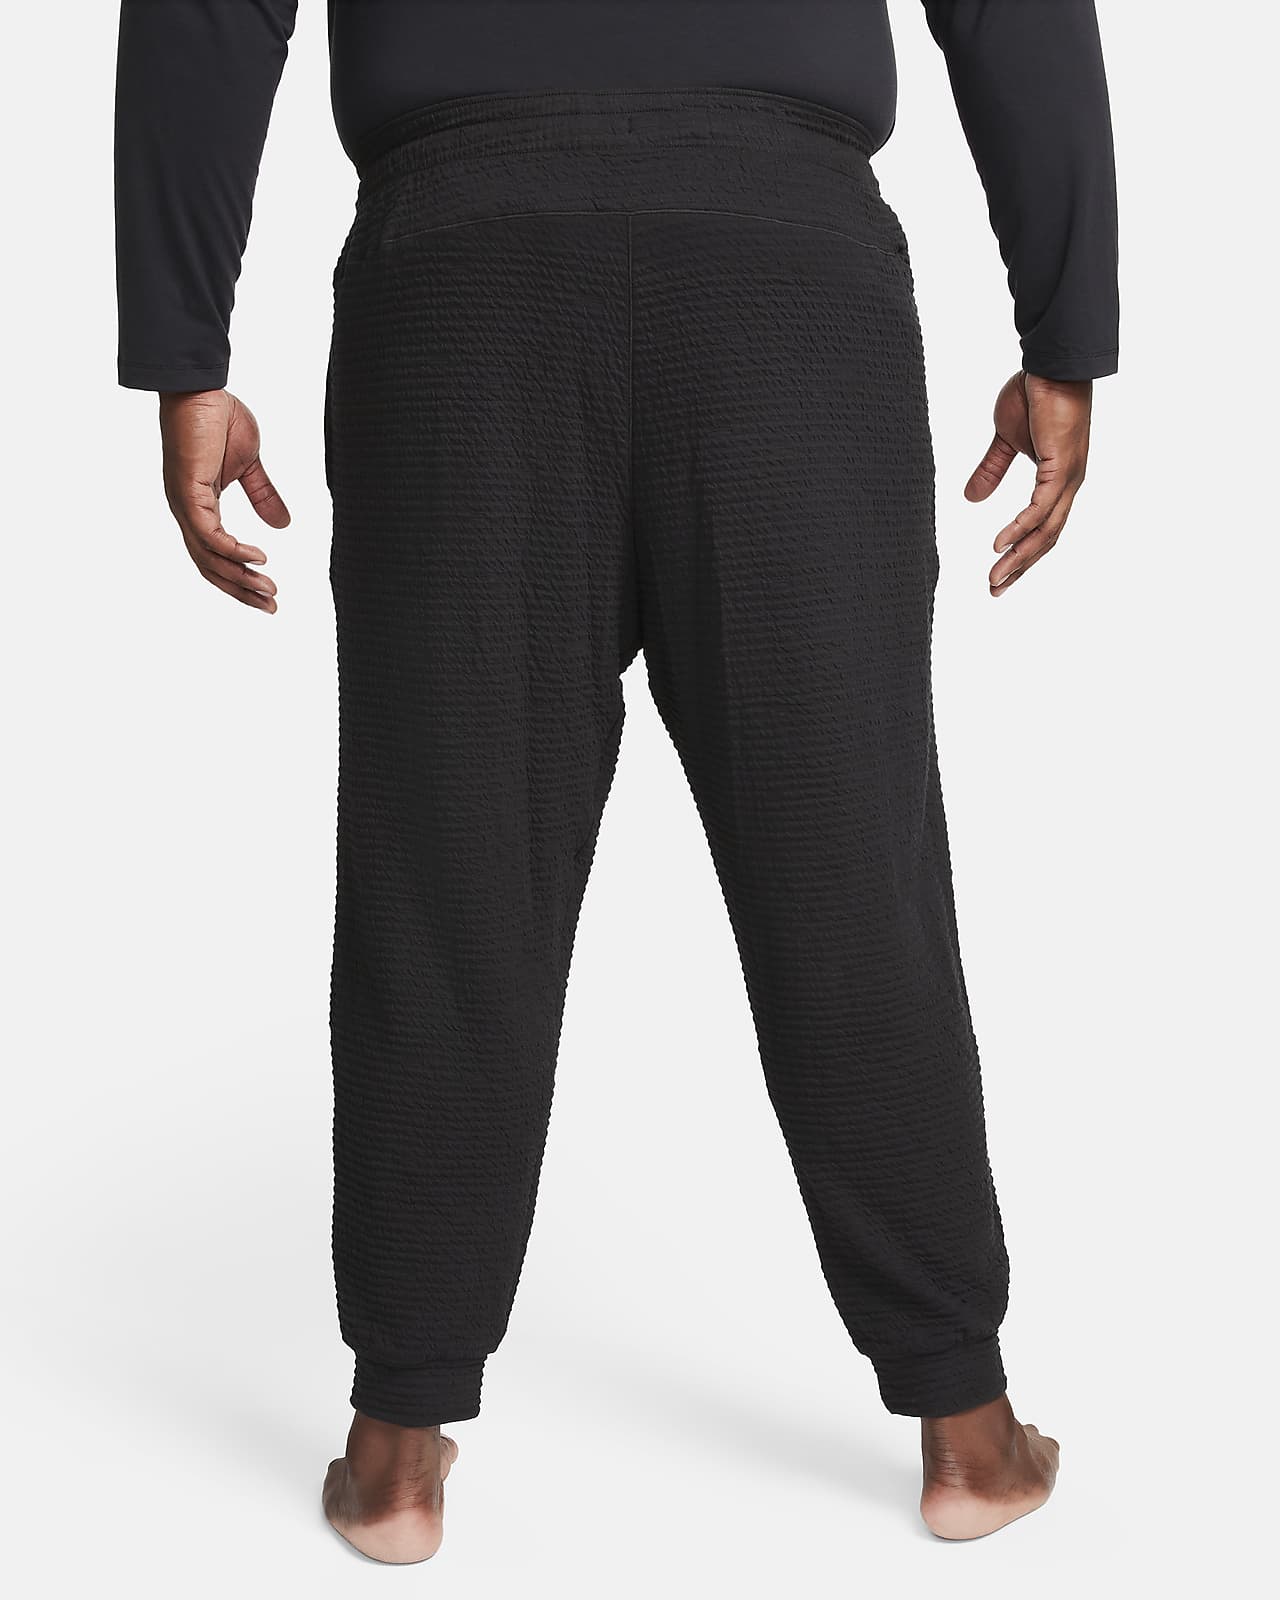 Nike Yoga Dri-FIT Move to Zero Pants Mens XL Black / Off Noir